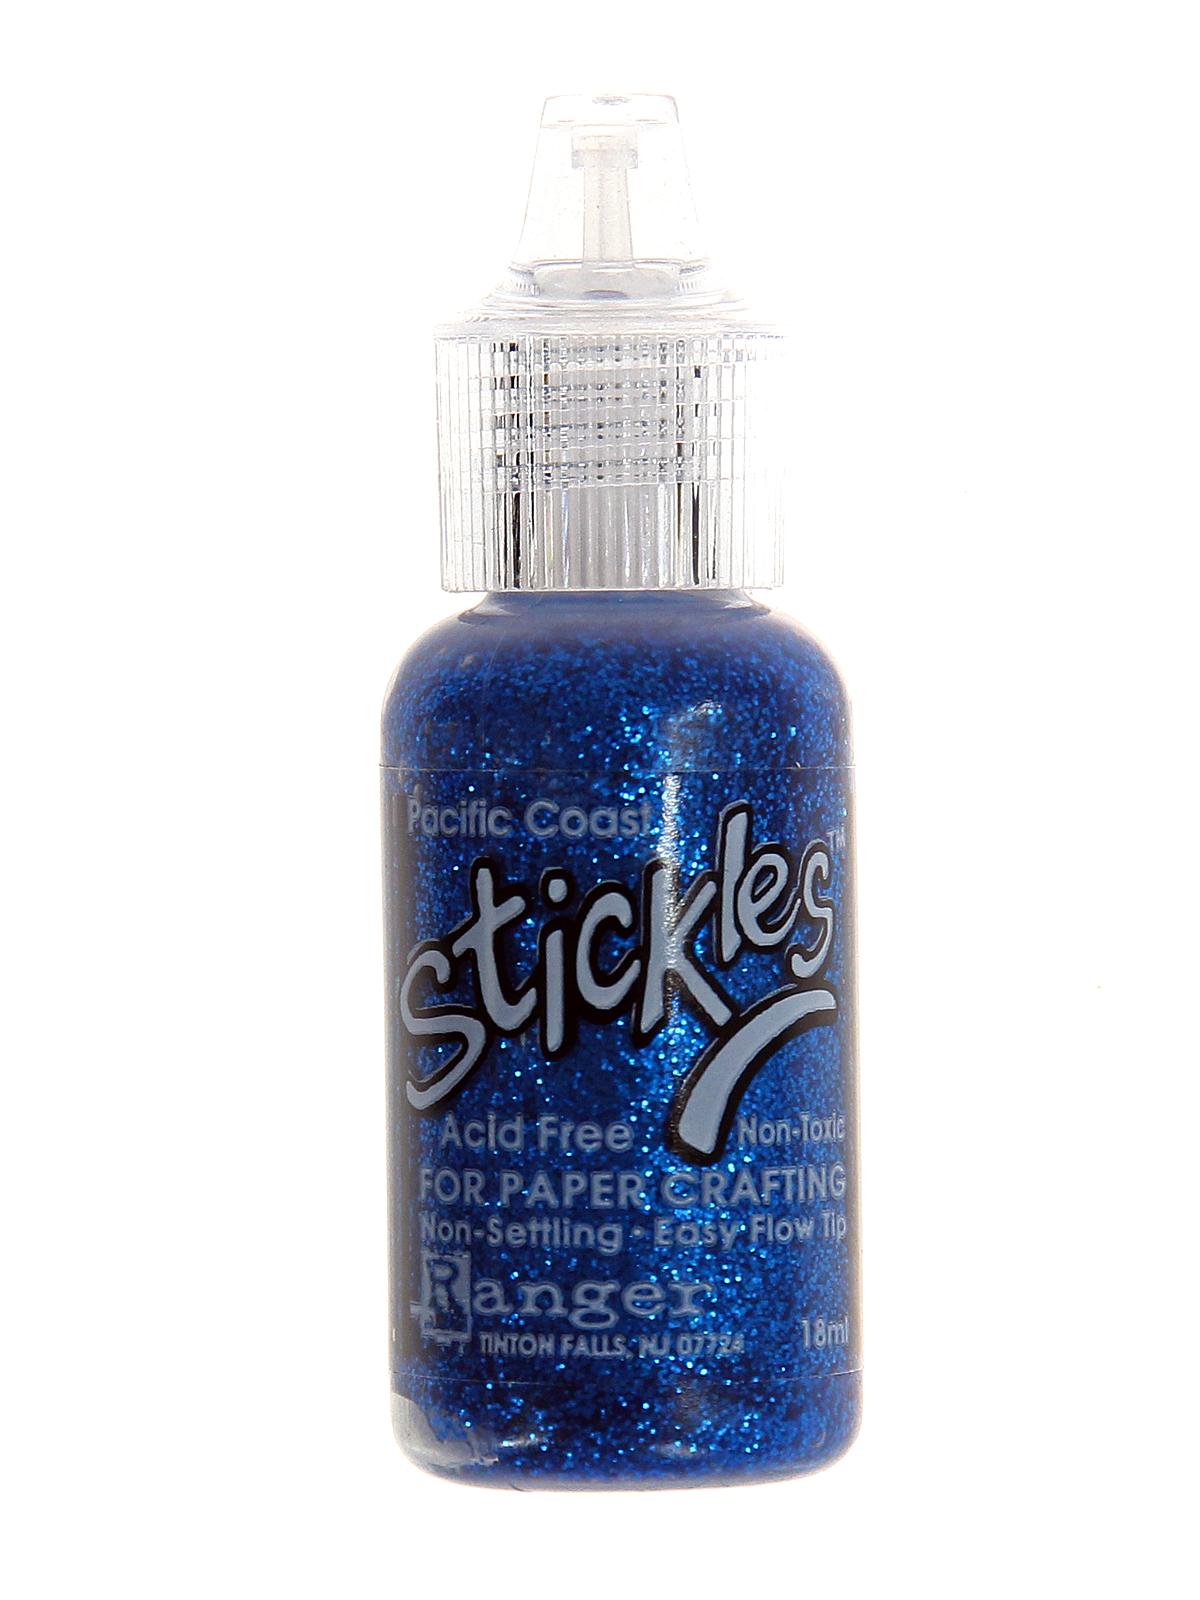 Stickles Glitter Glue Pacific Coast 0.5 Oz. Bottle